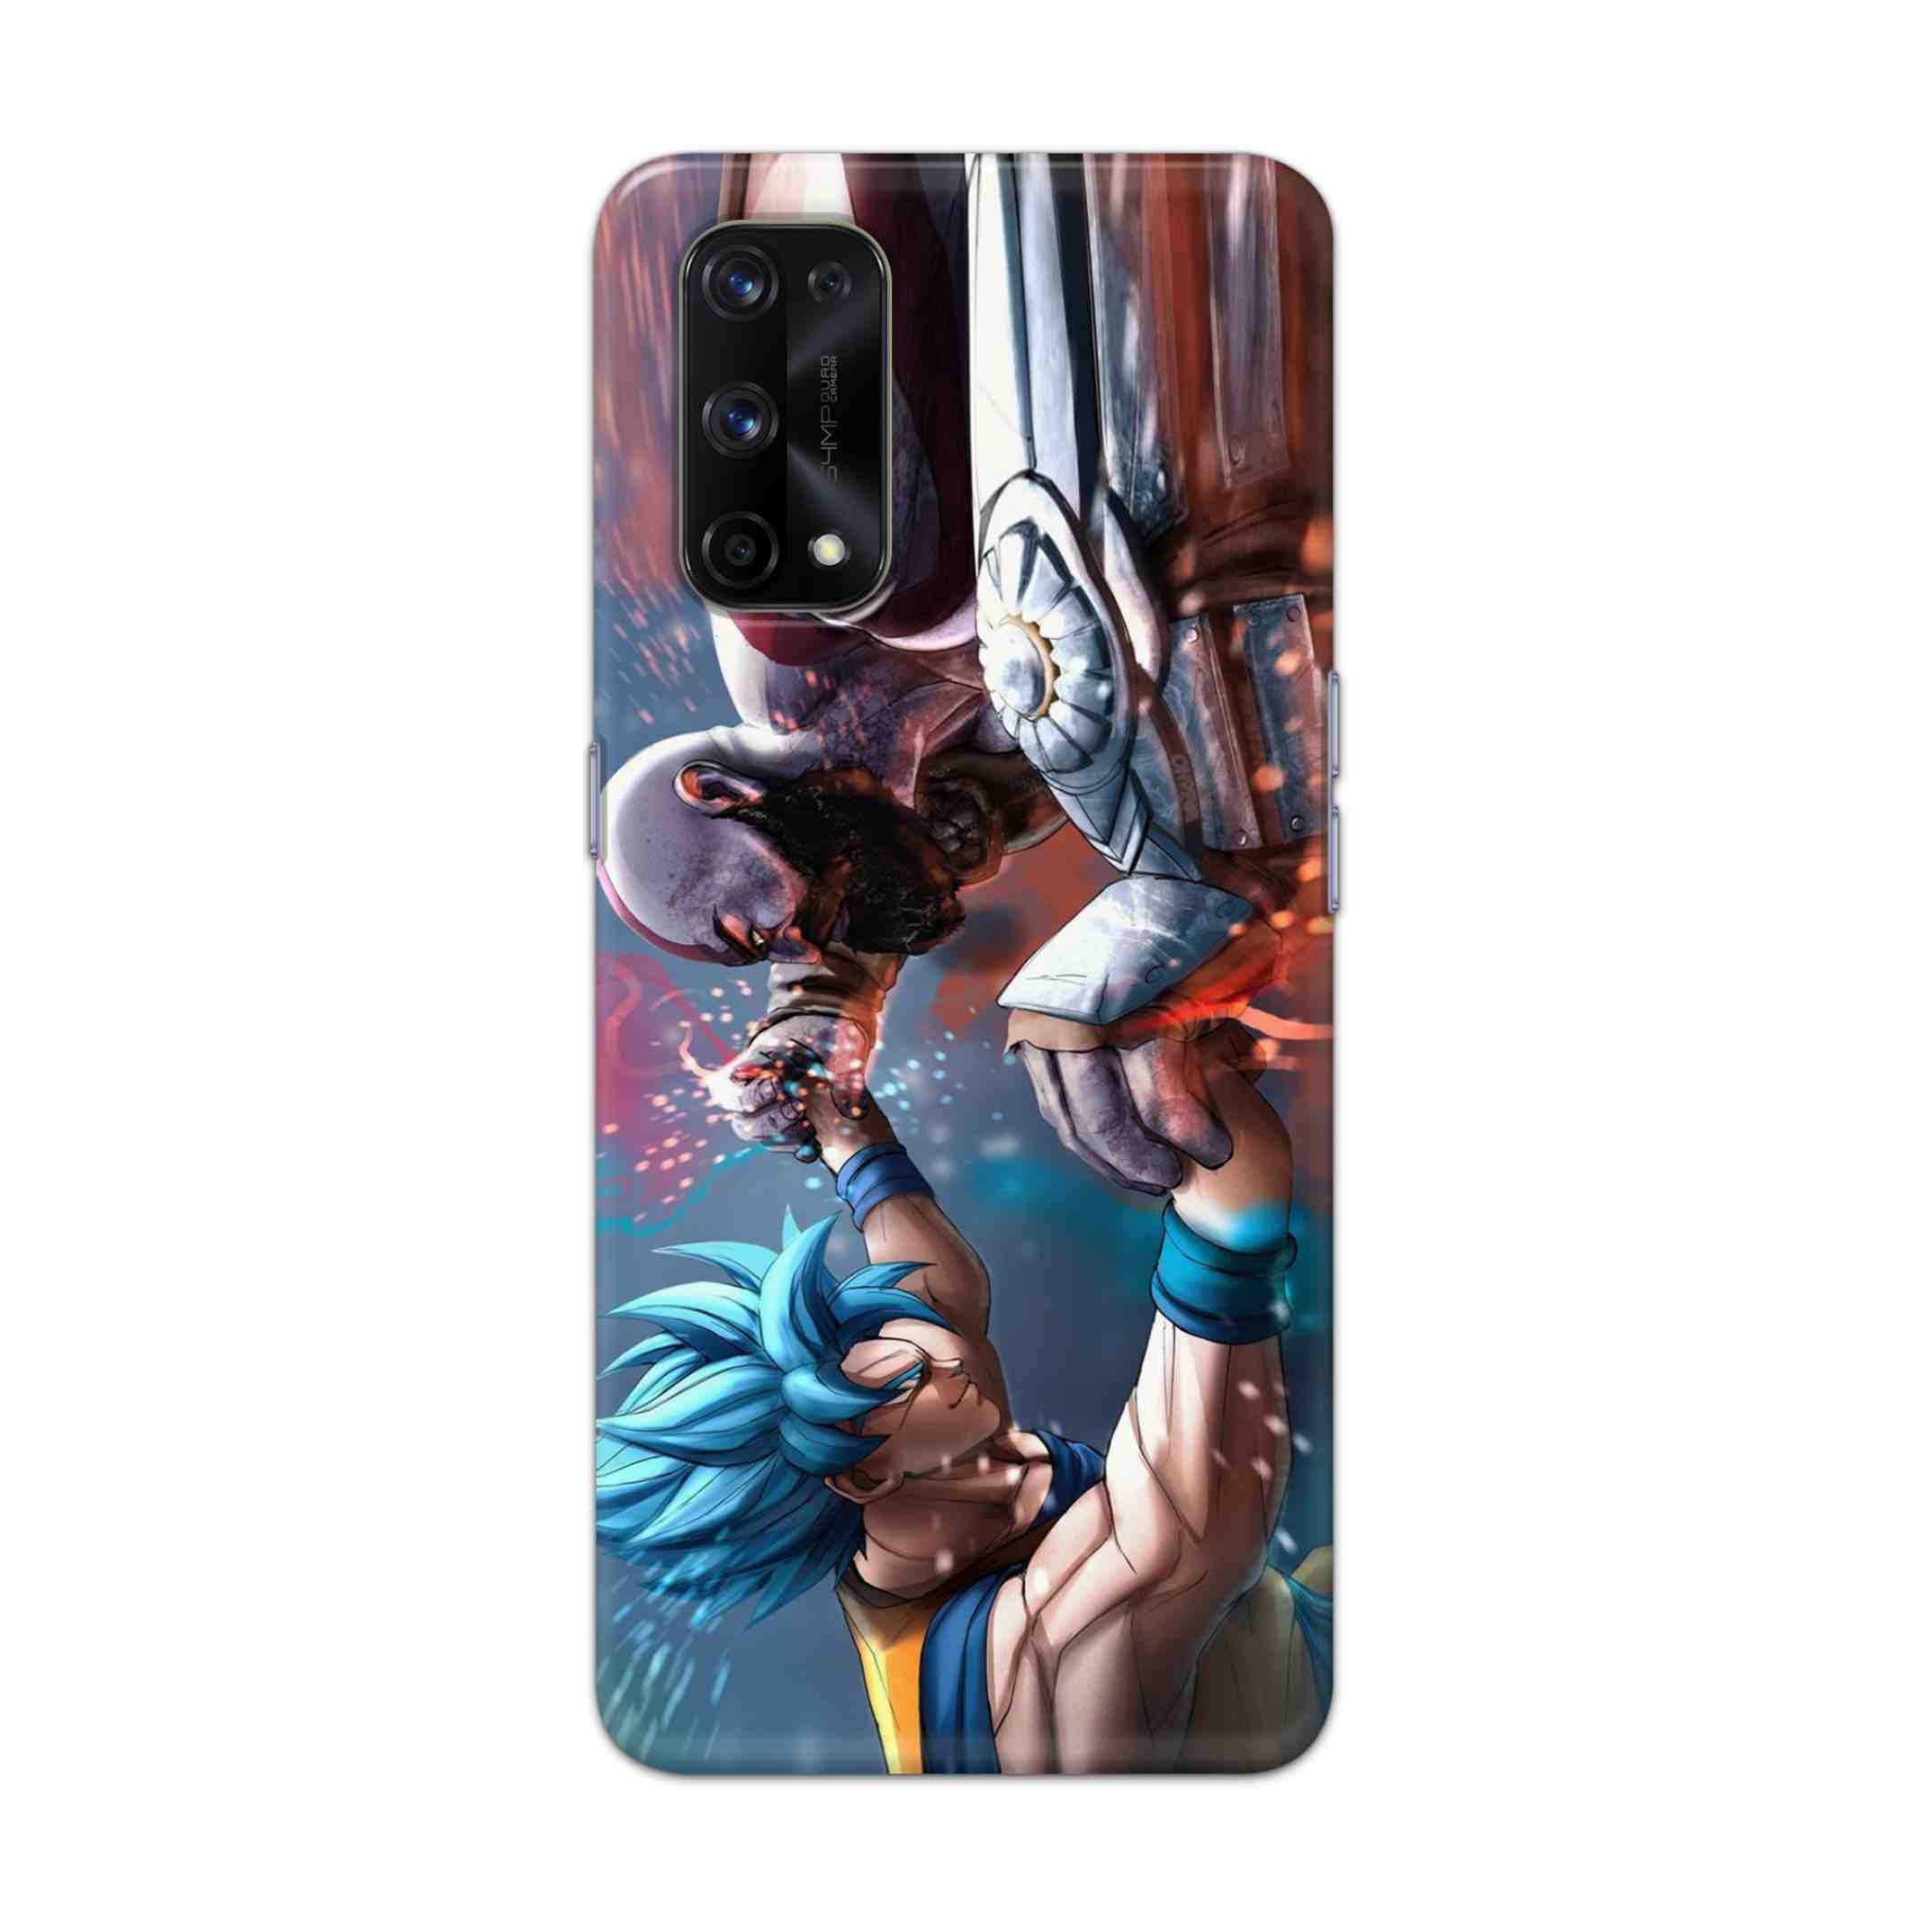 Buy Goku Vs Kratos Hard Back Mobile Phone Case Cover For Realme X7 Pro Online